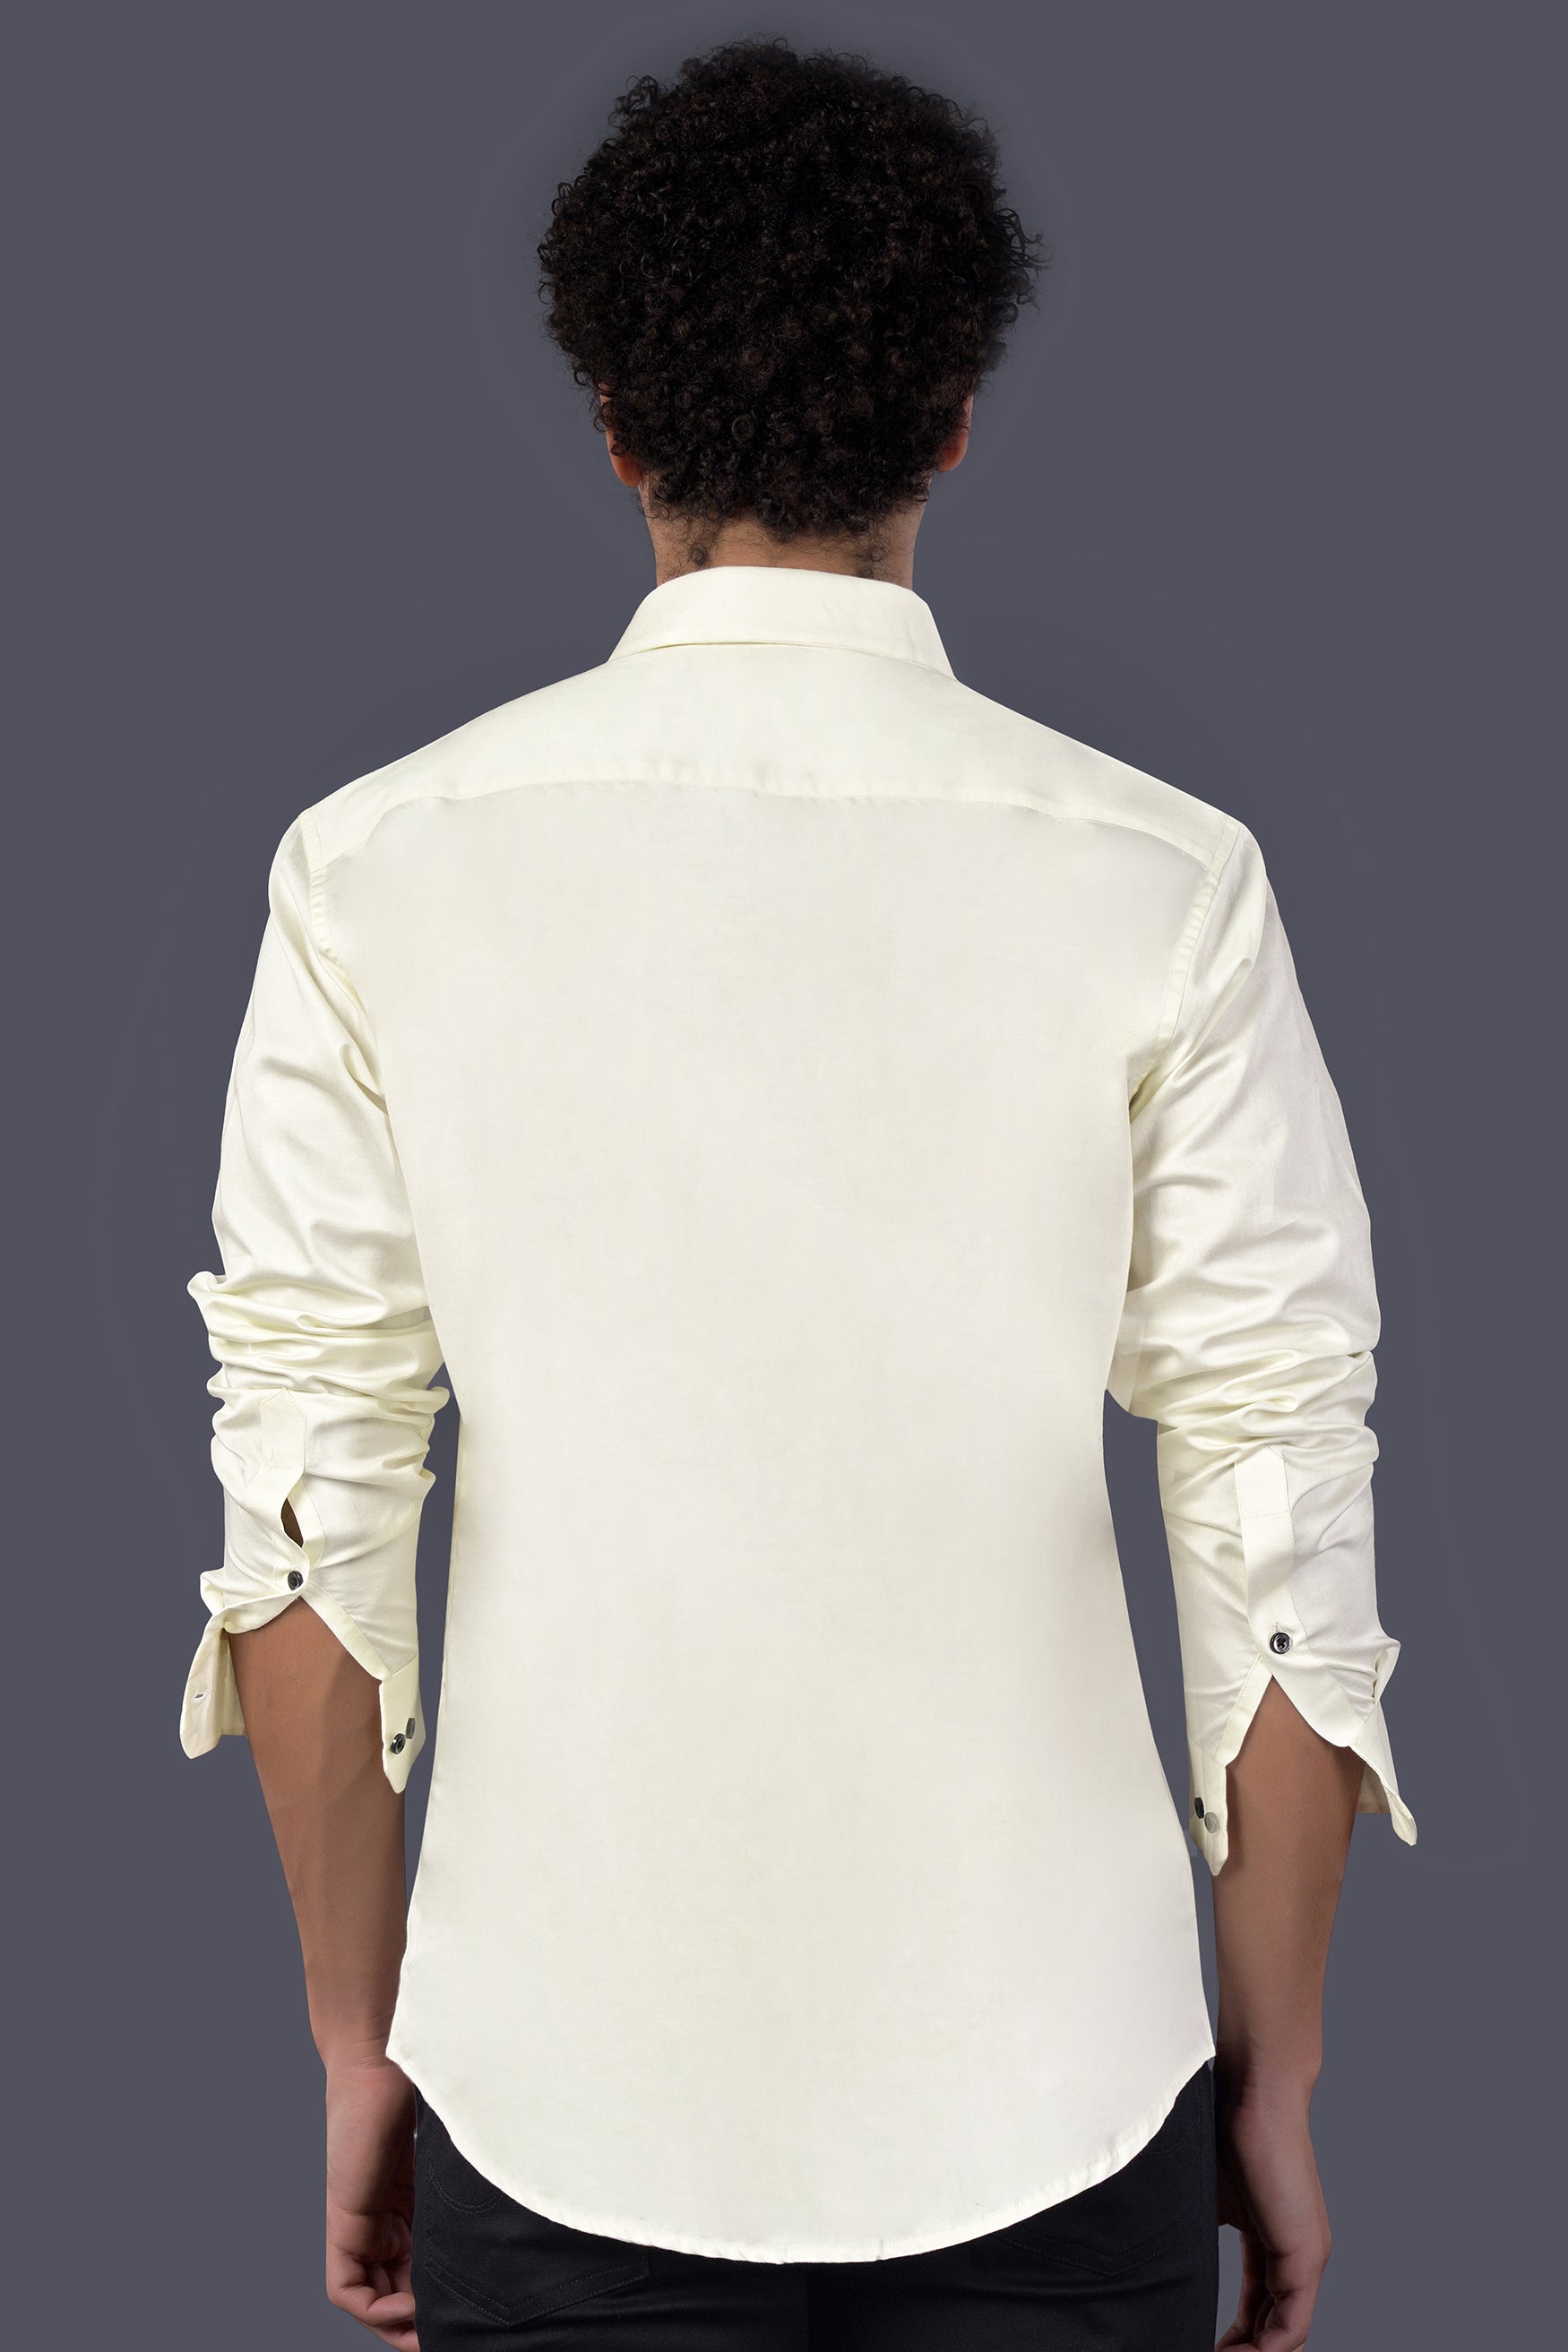 Amour Cream French Crown Elements Embroidered Subtle Sheen Super Soft Premium Cotton Designer Shirt